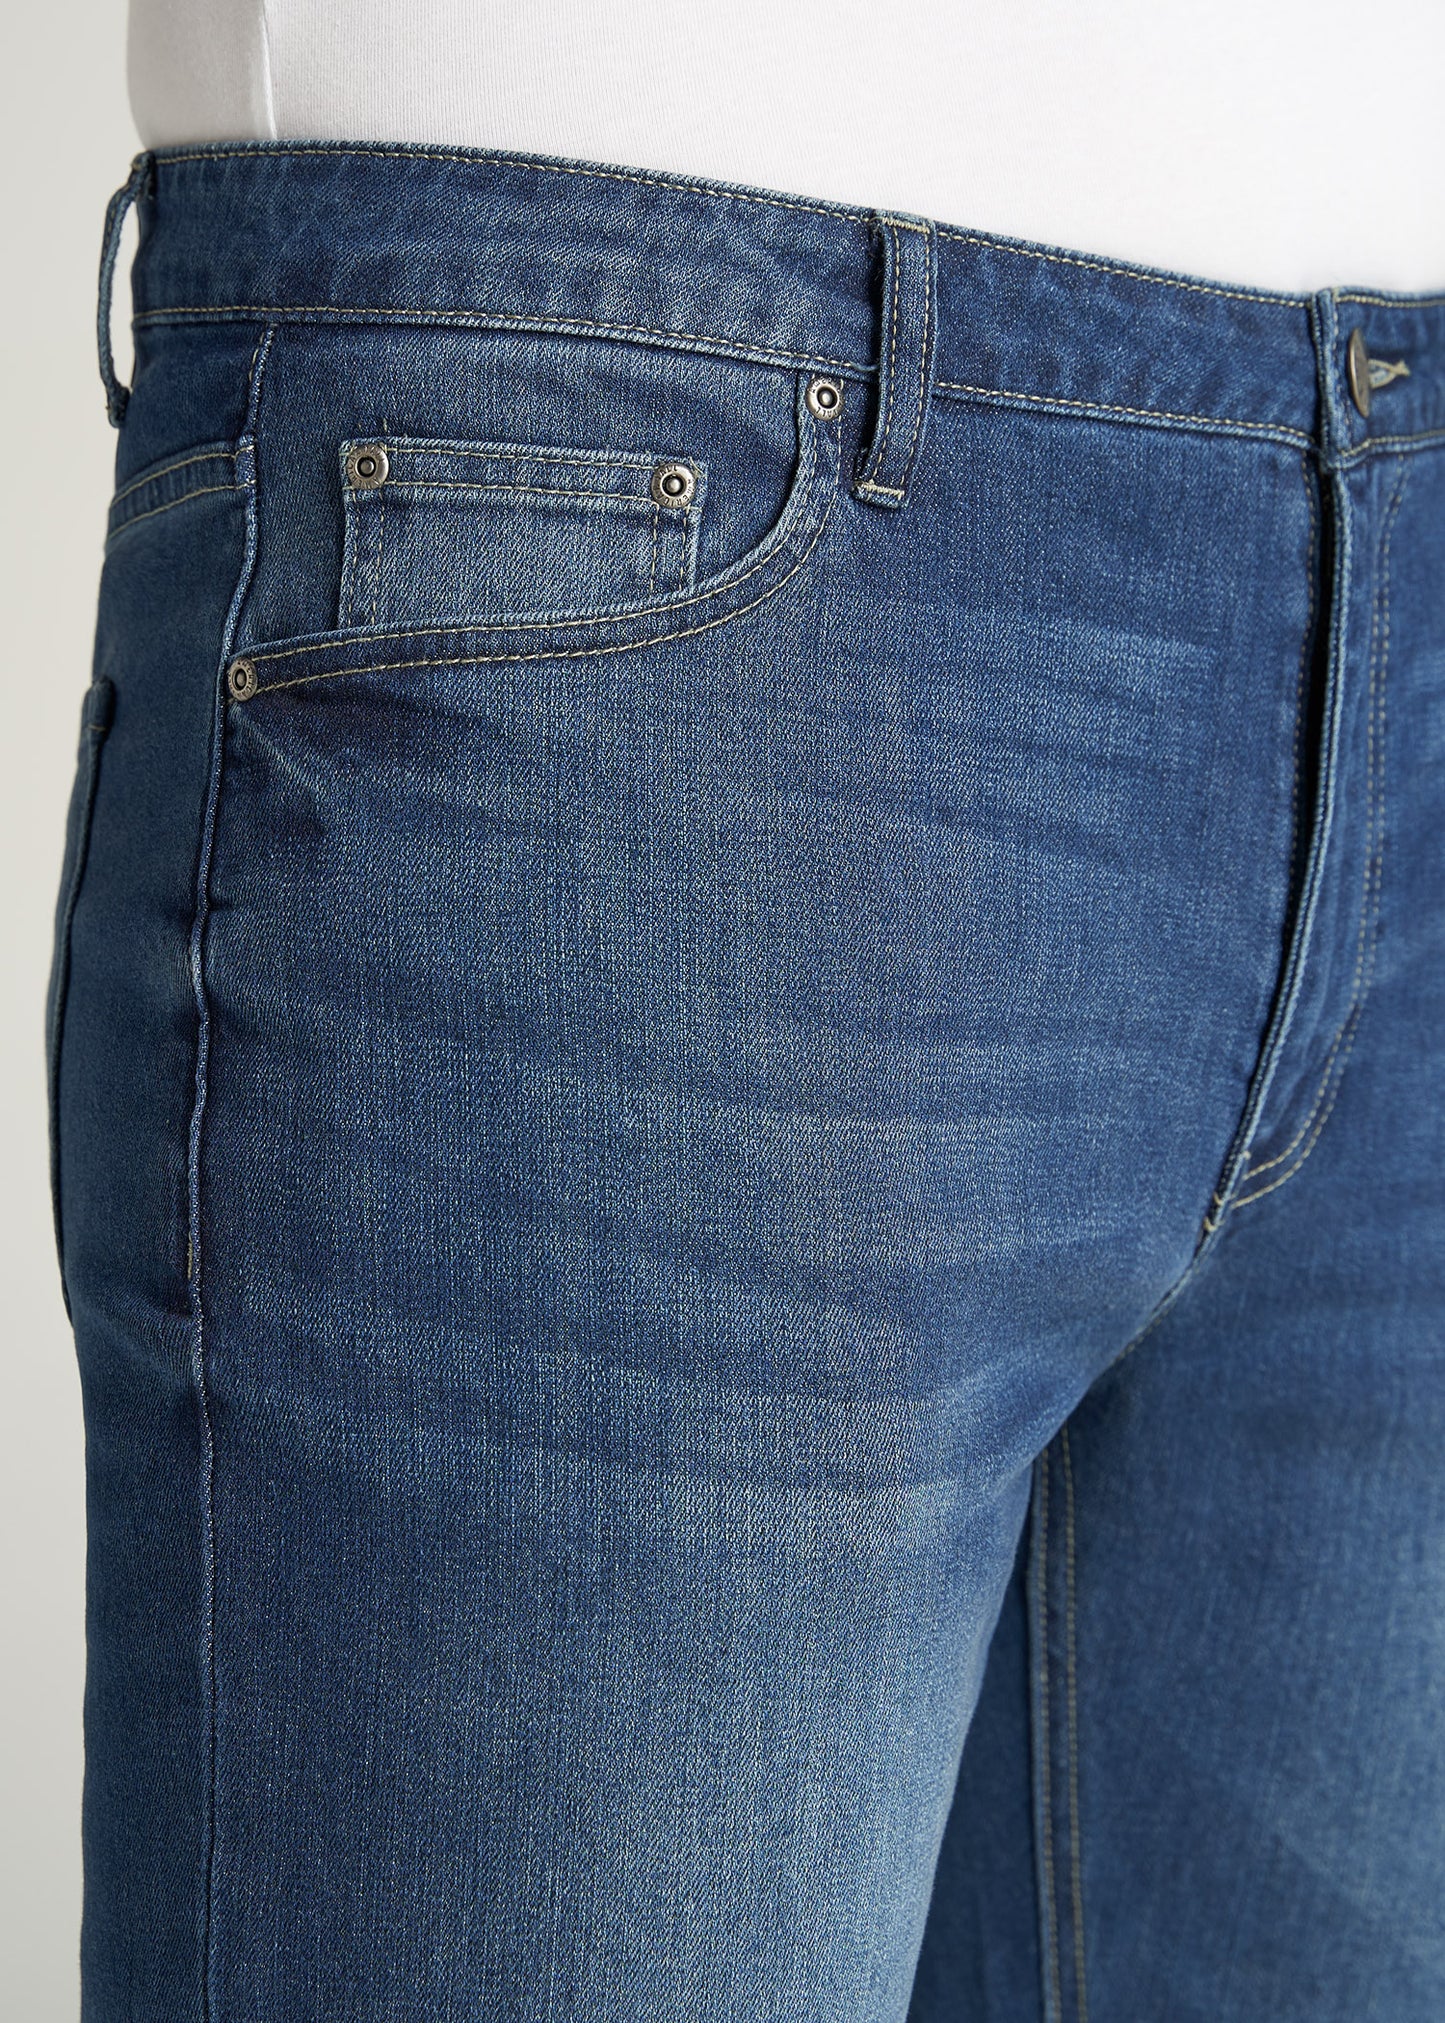    American-Tall-Men-J1-StraightLeg-Jeans-ClassicBlue-pocket